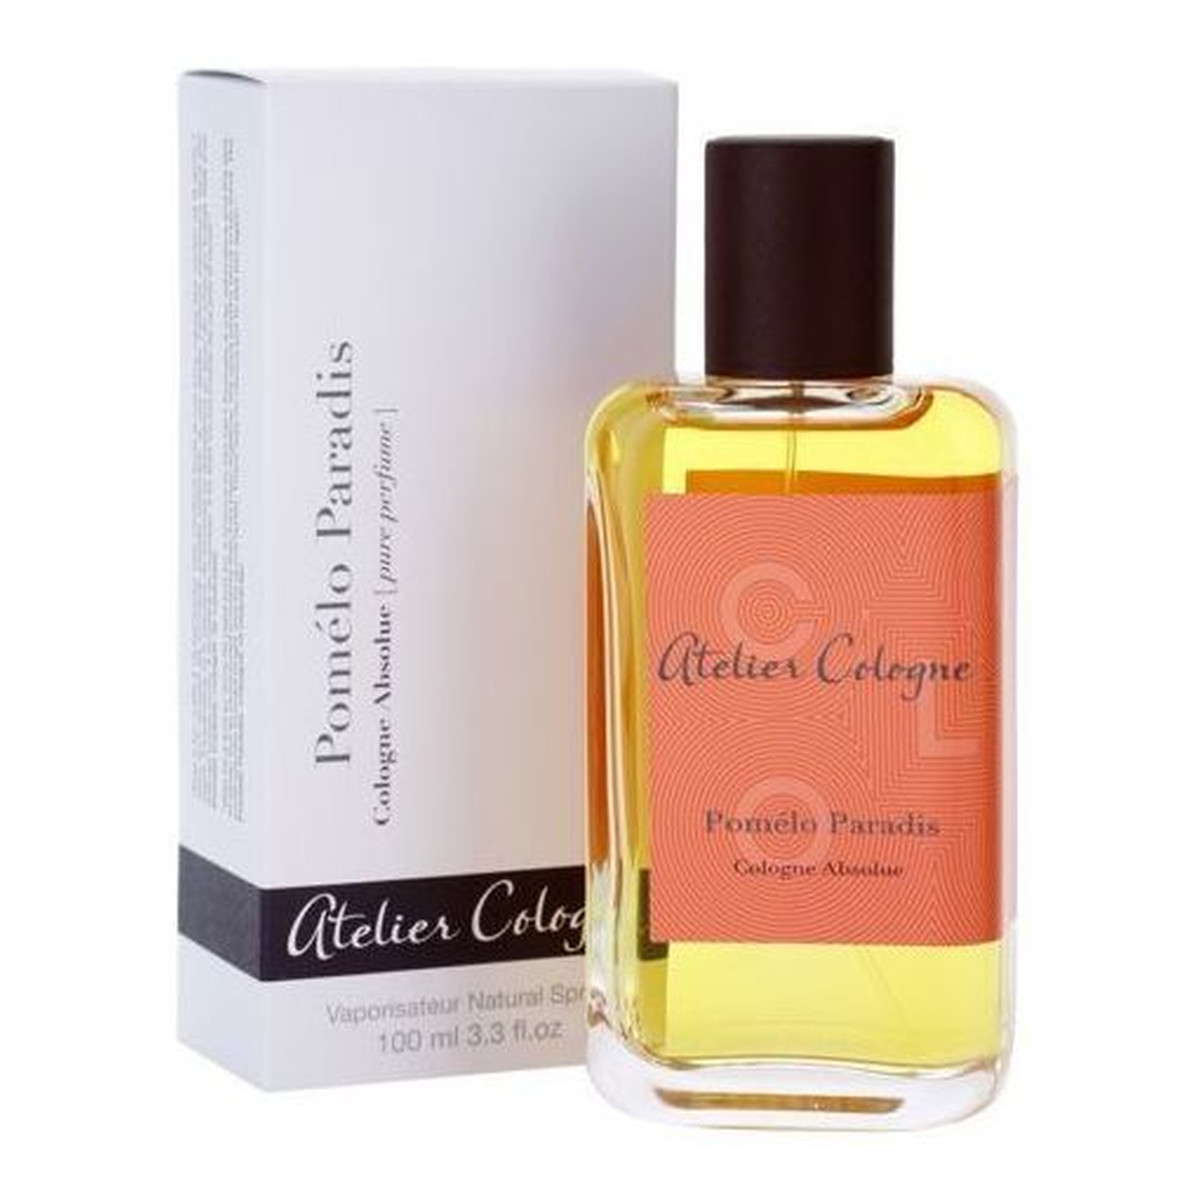 Atelier Cologne Pomelo paradis edc (ATELIER COLOGNE) Perfumy Spray 100ml